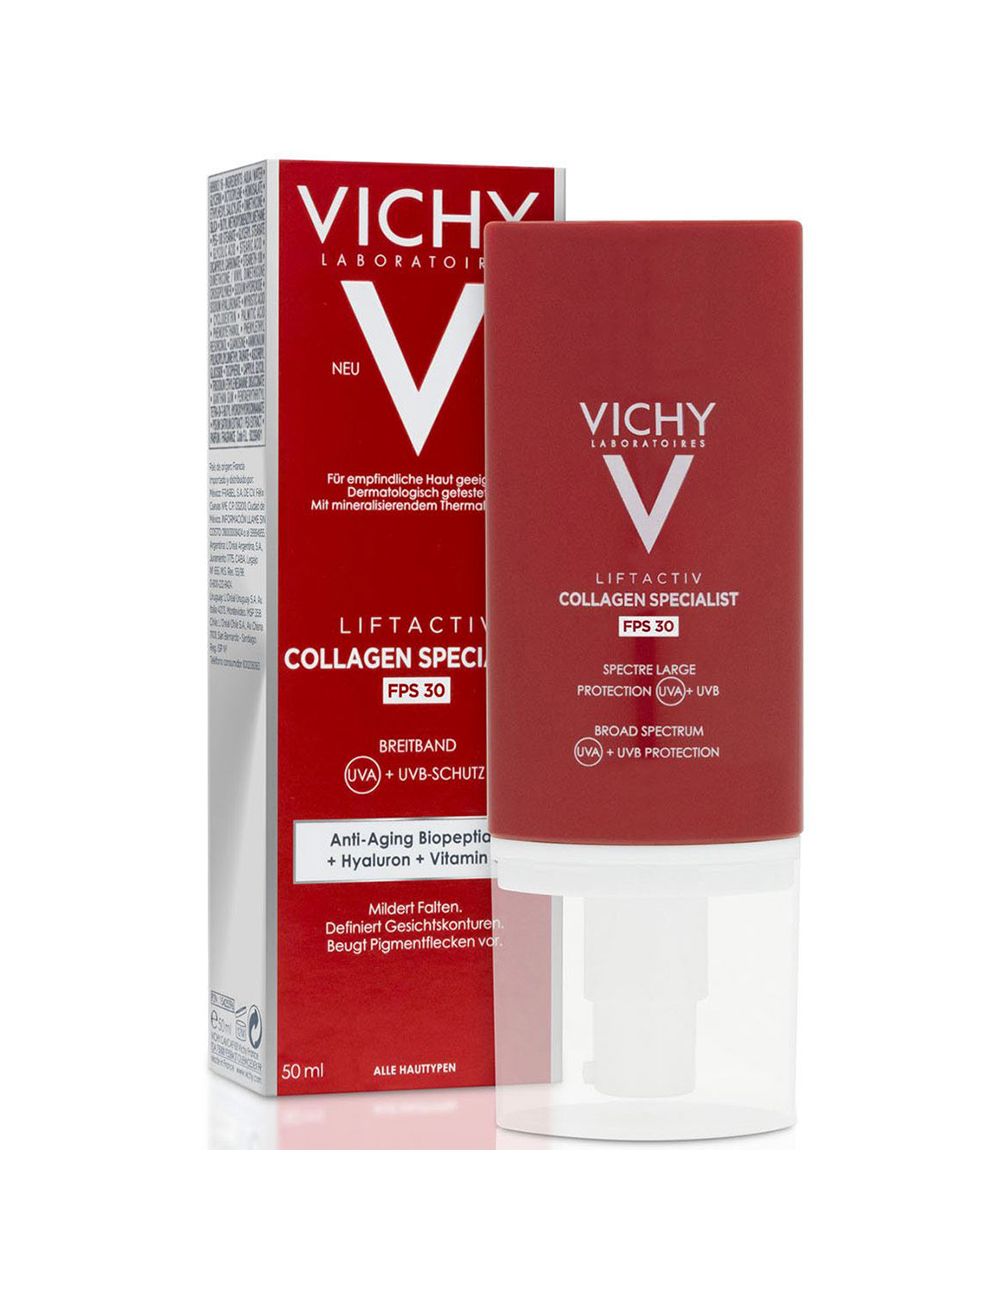 Vichy Liftactiv Collagen Specialist Fps 30 50 mL